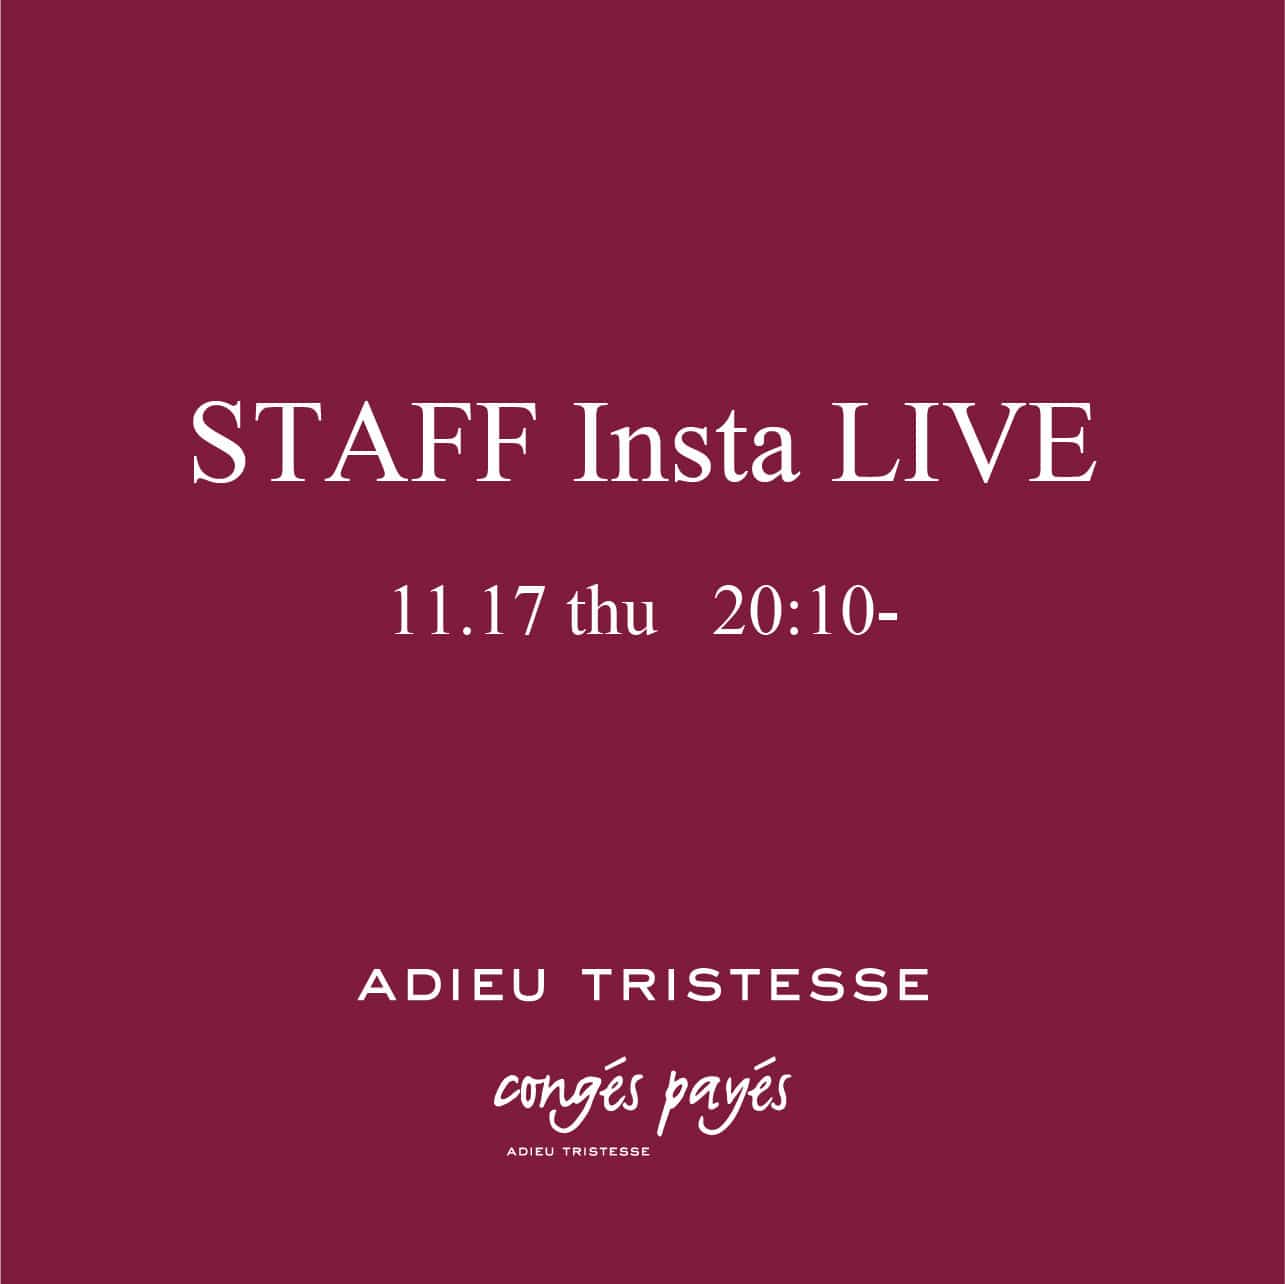 STAFF Insta Live